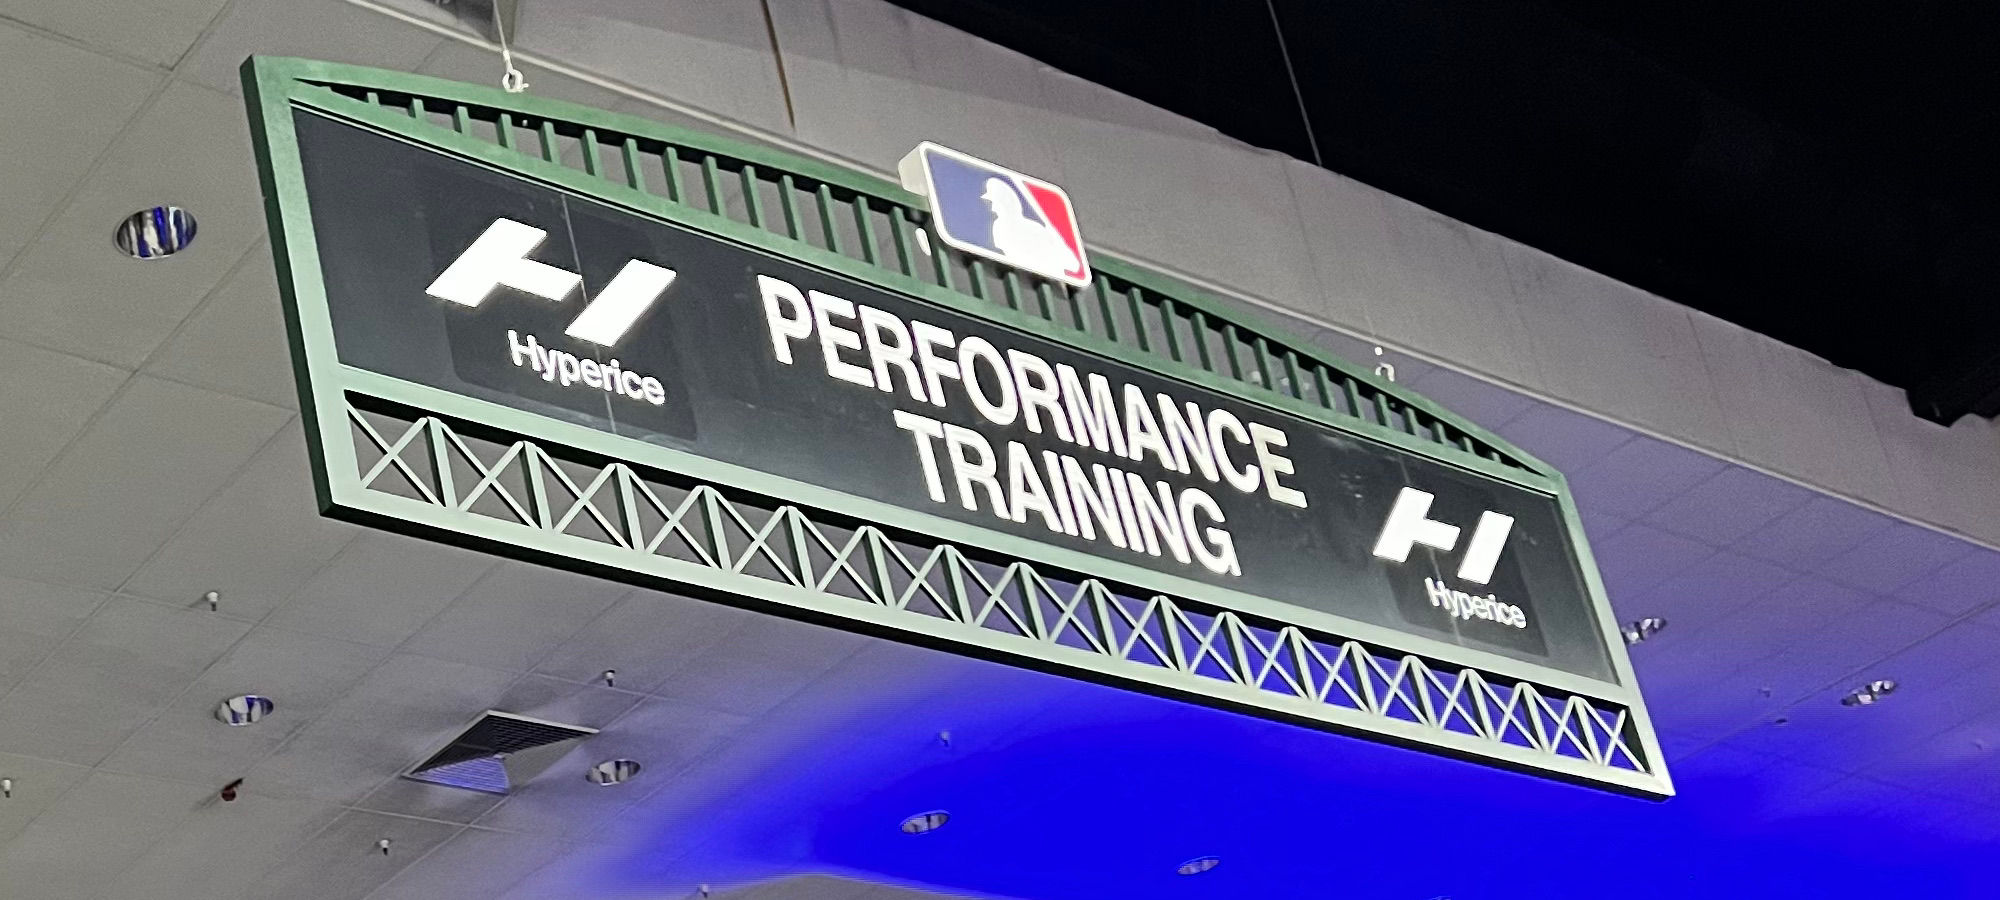 MLB Performance Training